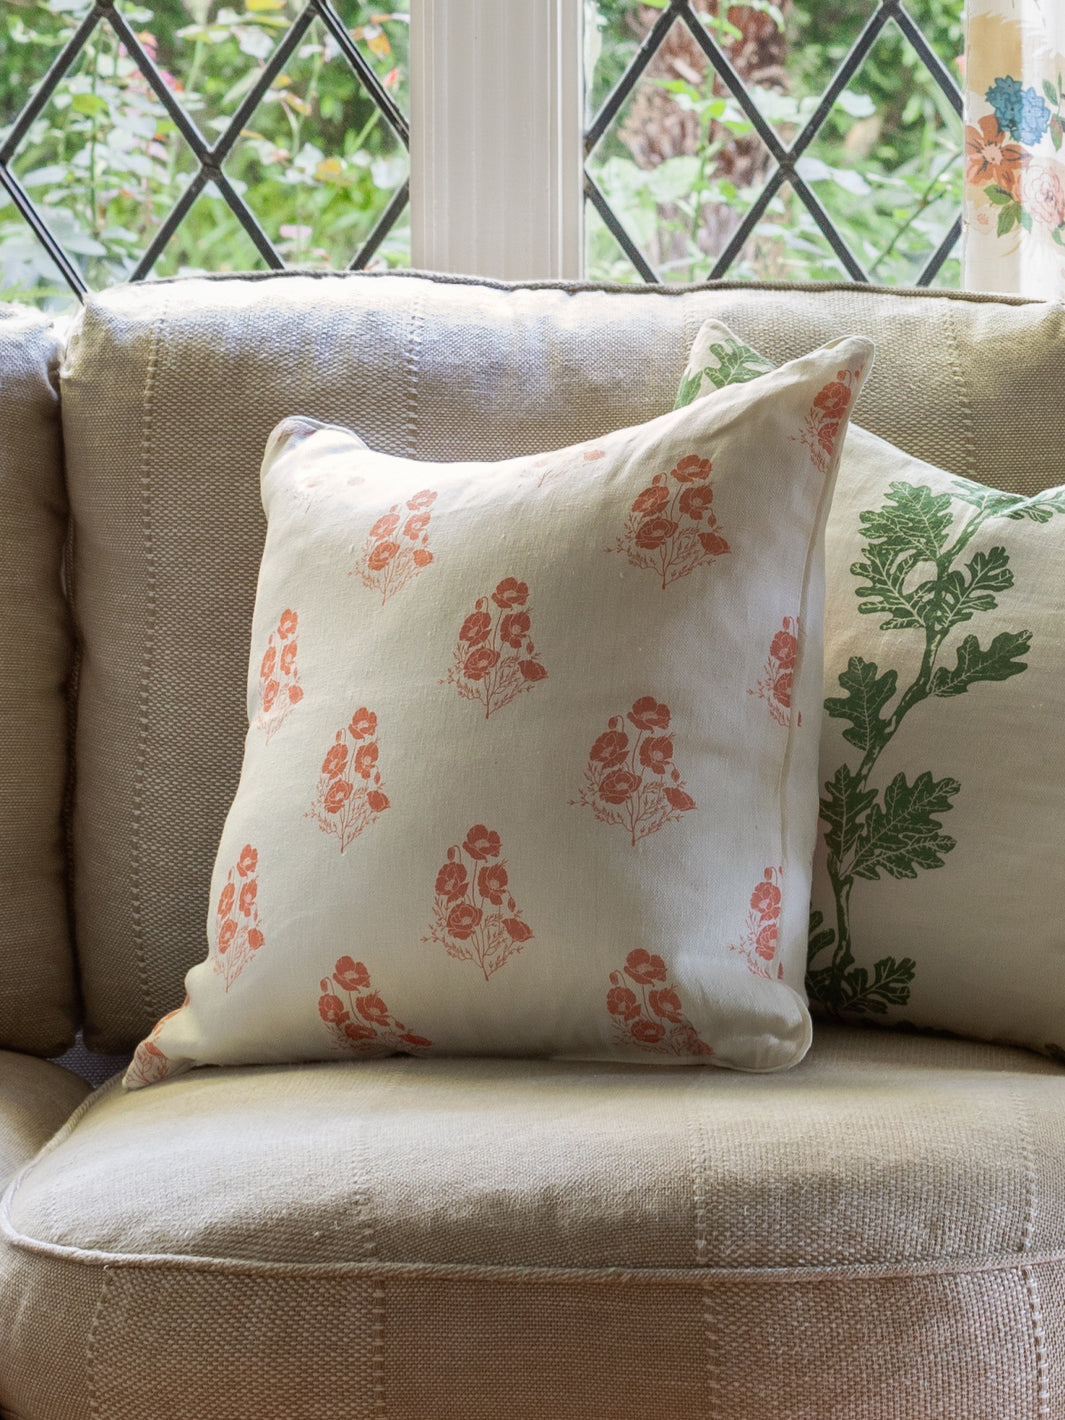 'California Poppy' Linen Fabric by Nathan Turner - Seafoam